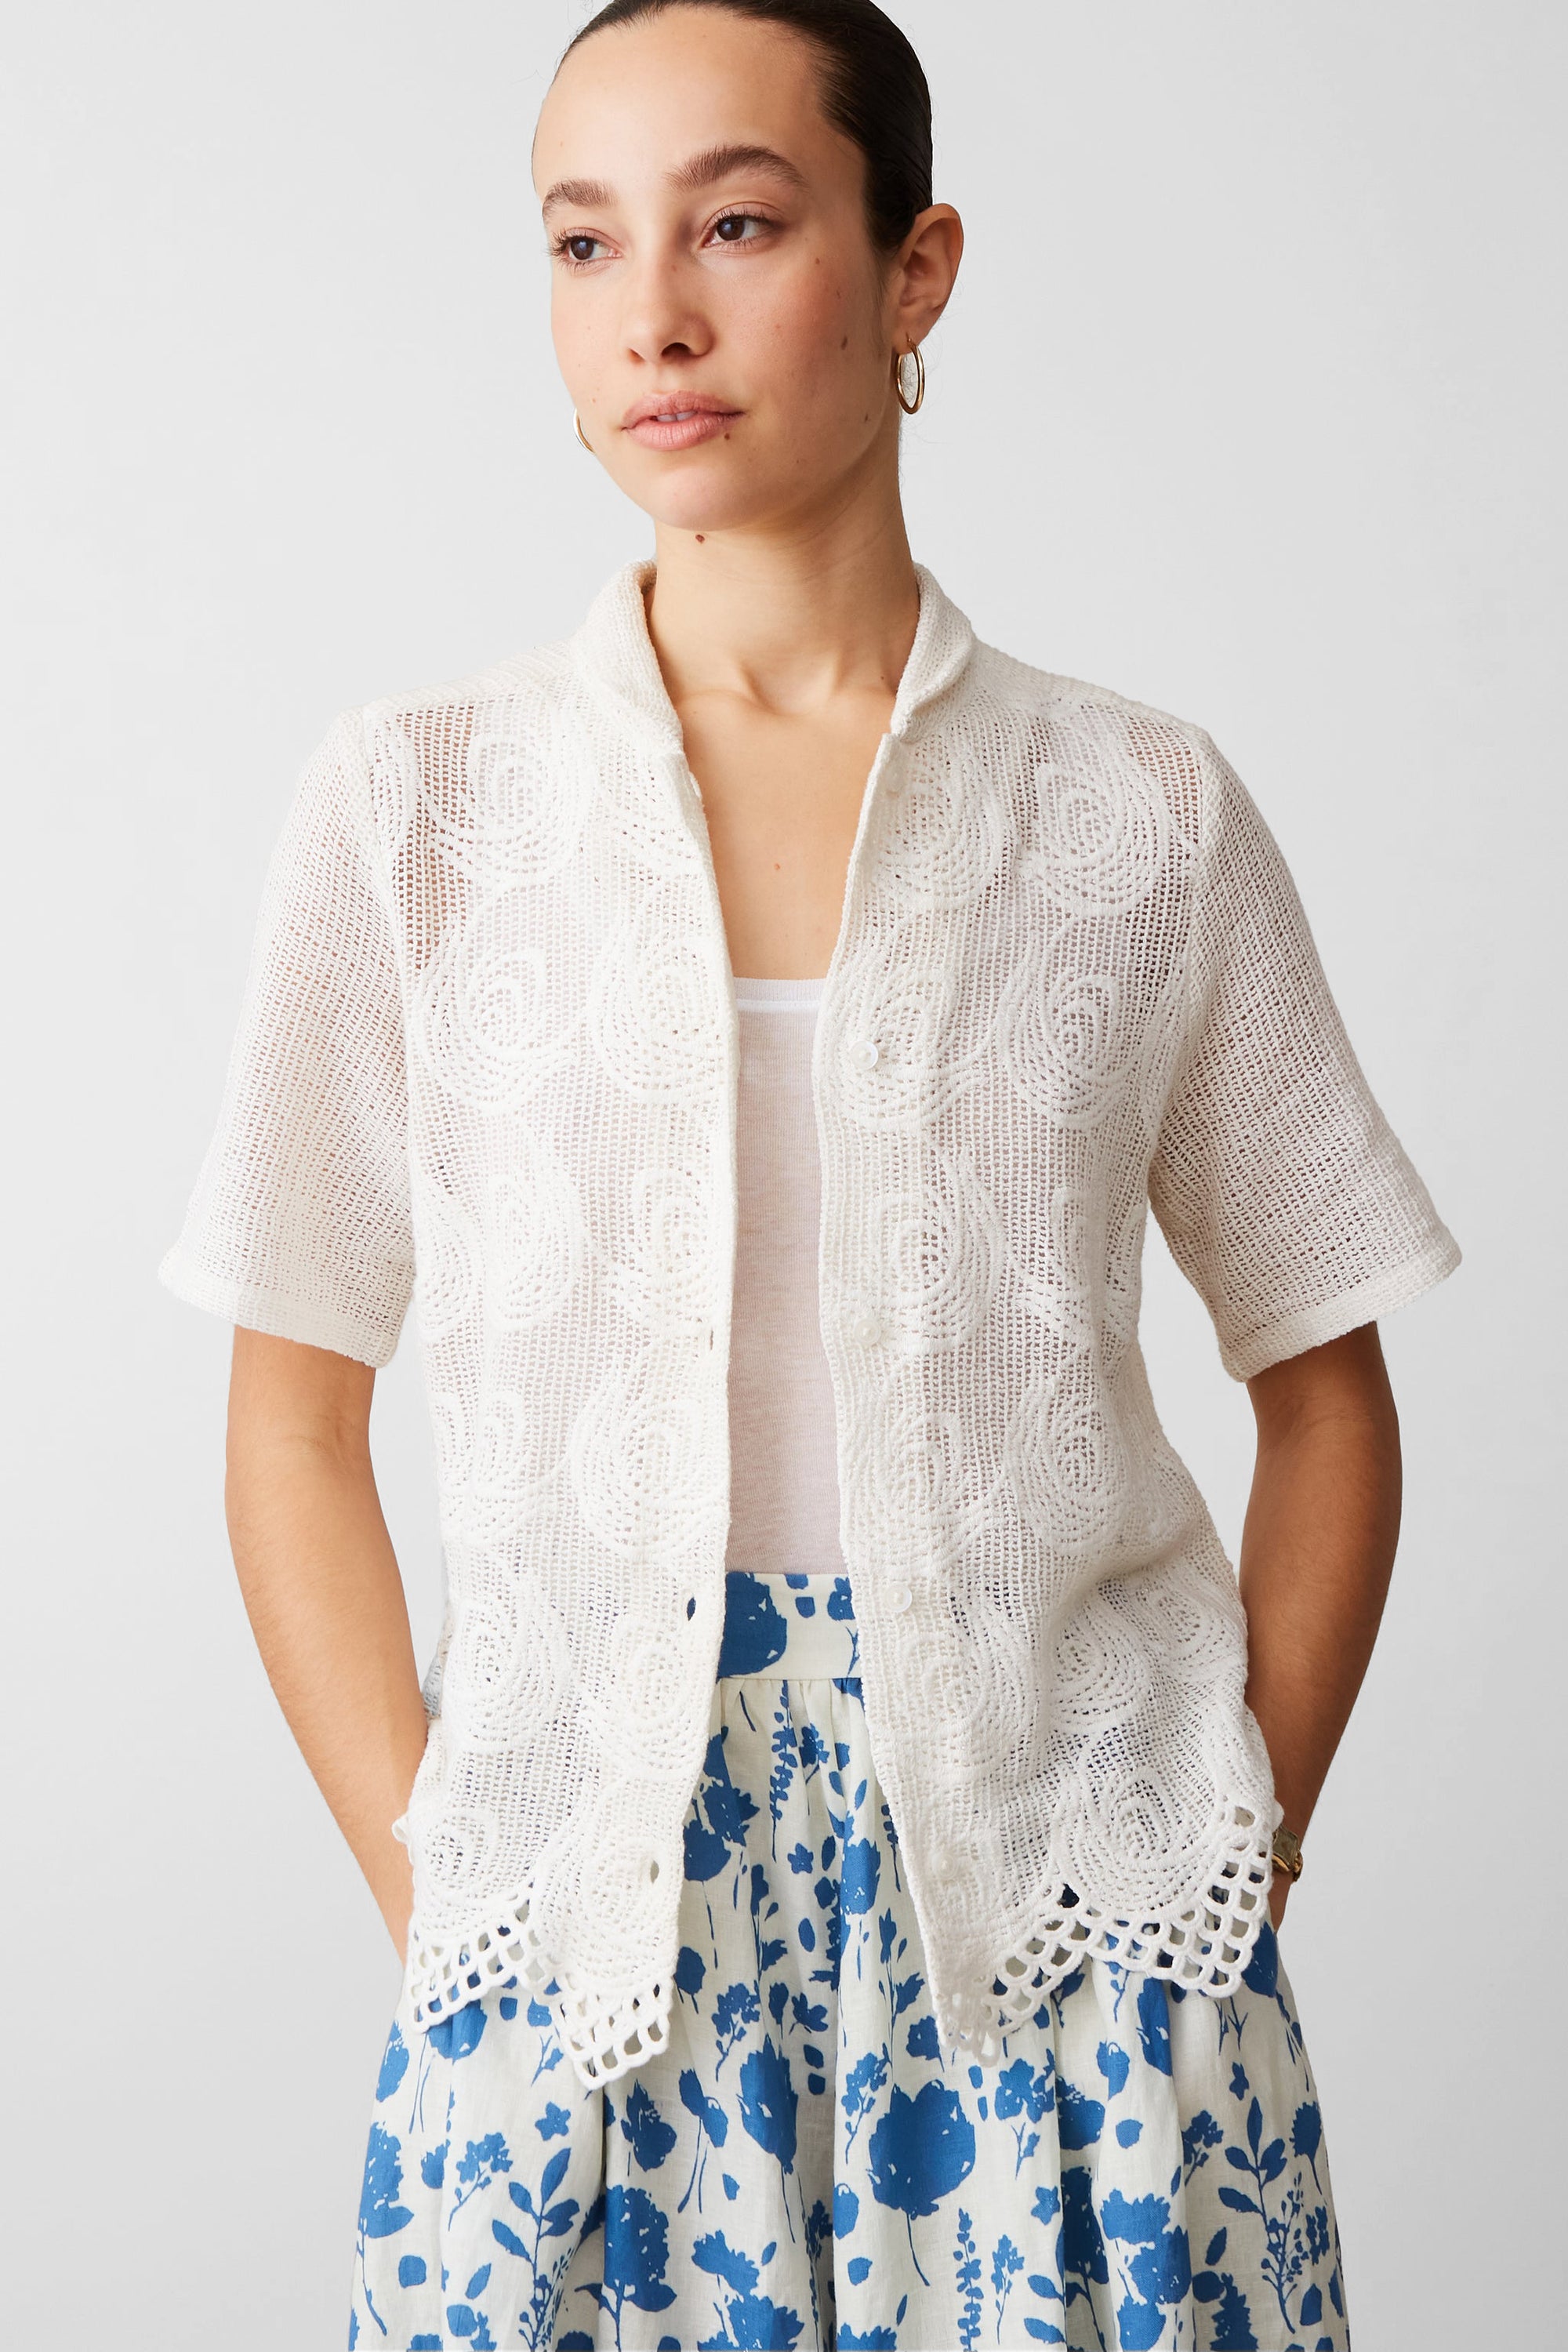 Jojo Shirt in Swirl Cotton Crochet by Caron Callahan